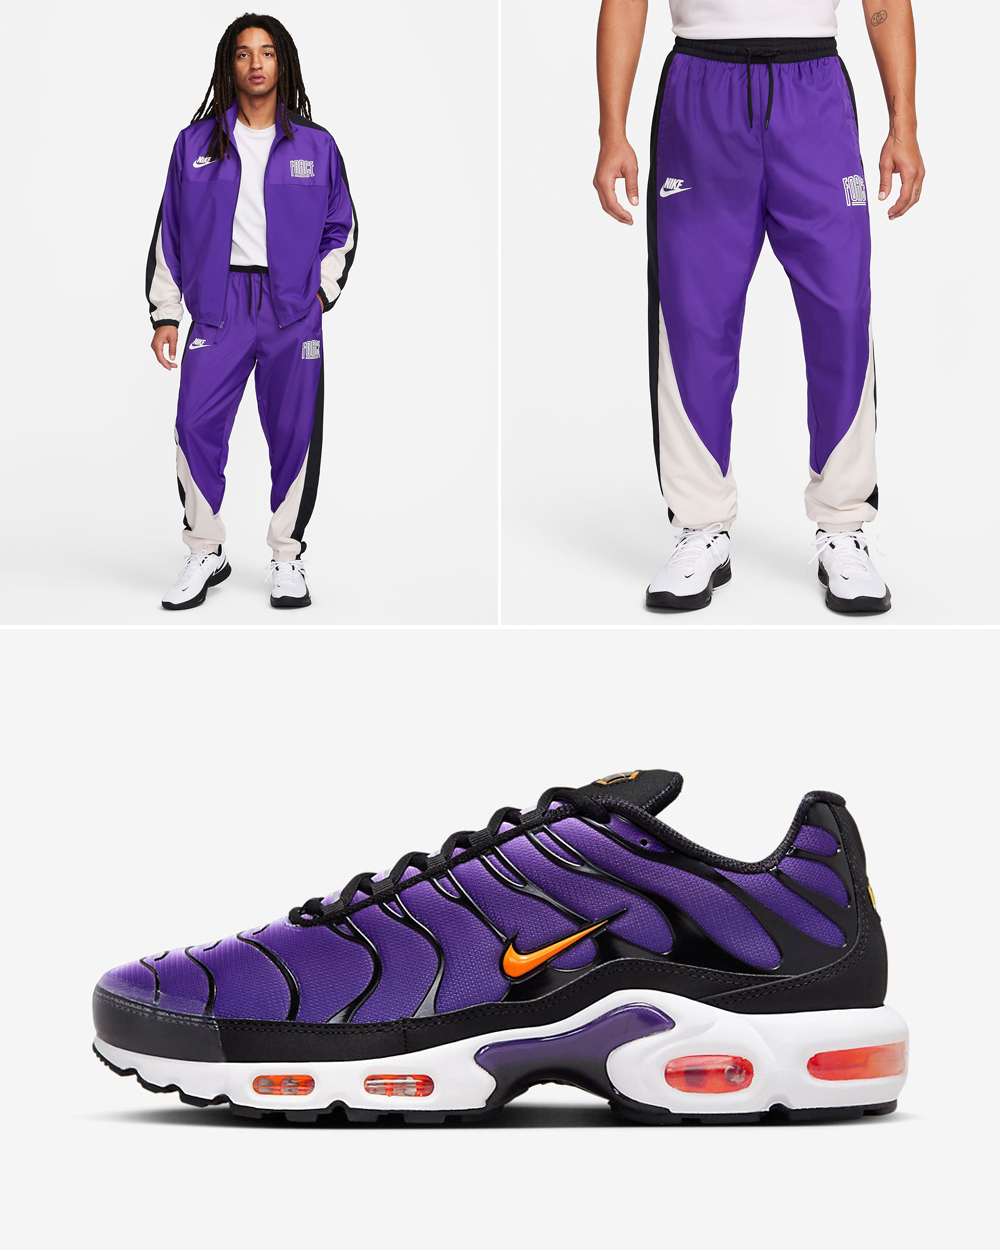 Nike Air Max Plus OG Voltage Purple Jacket Pants Outfit